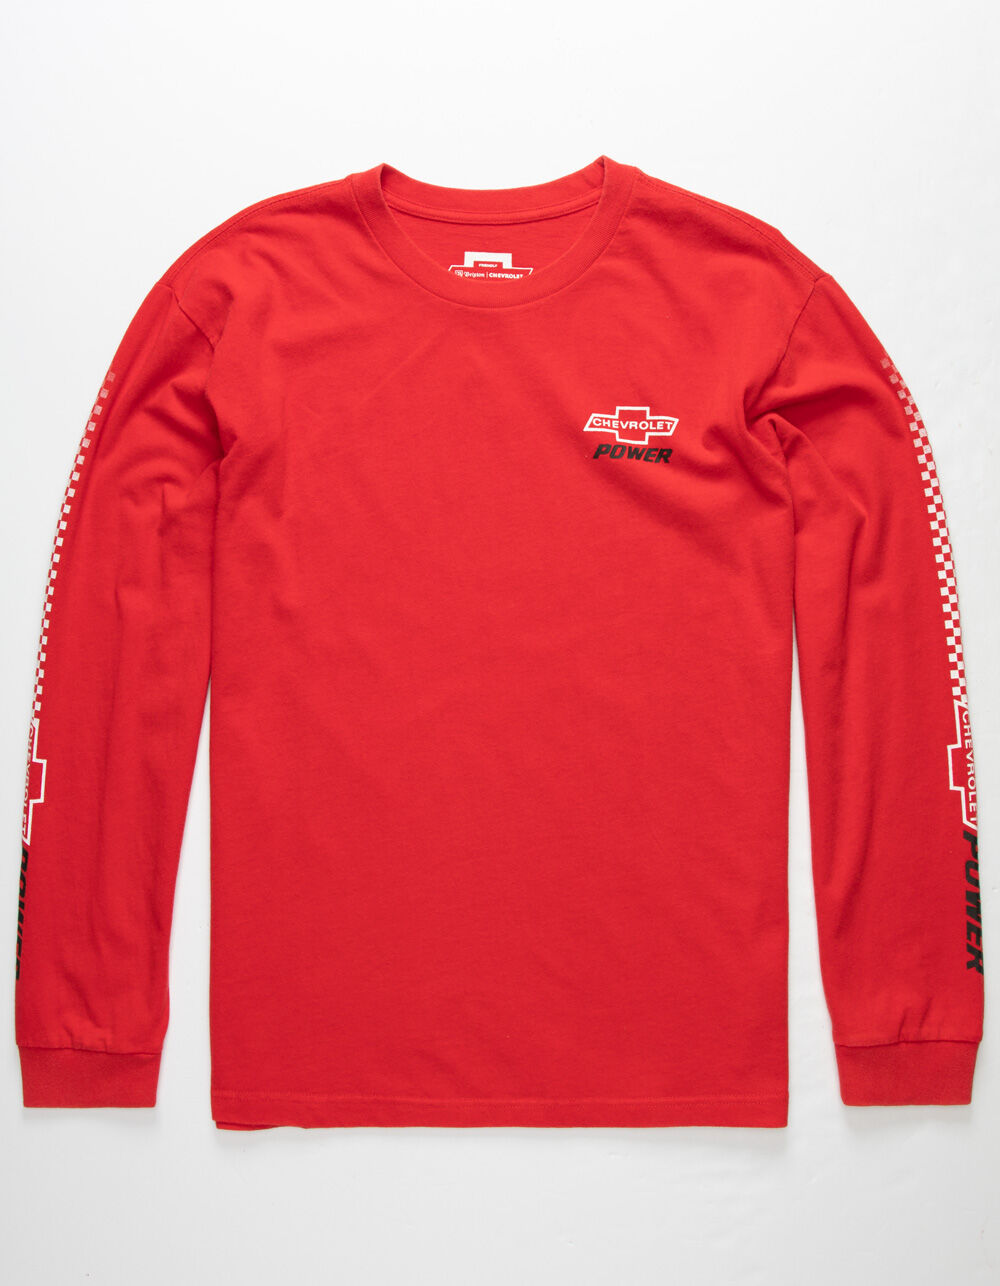 BRIXTON x Chevy Brickyard Red Mens T-Shirt - RED | Tillys